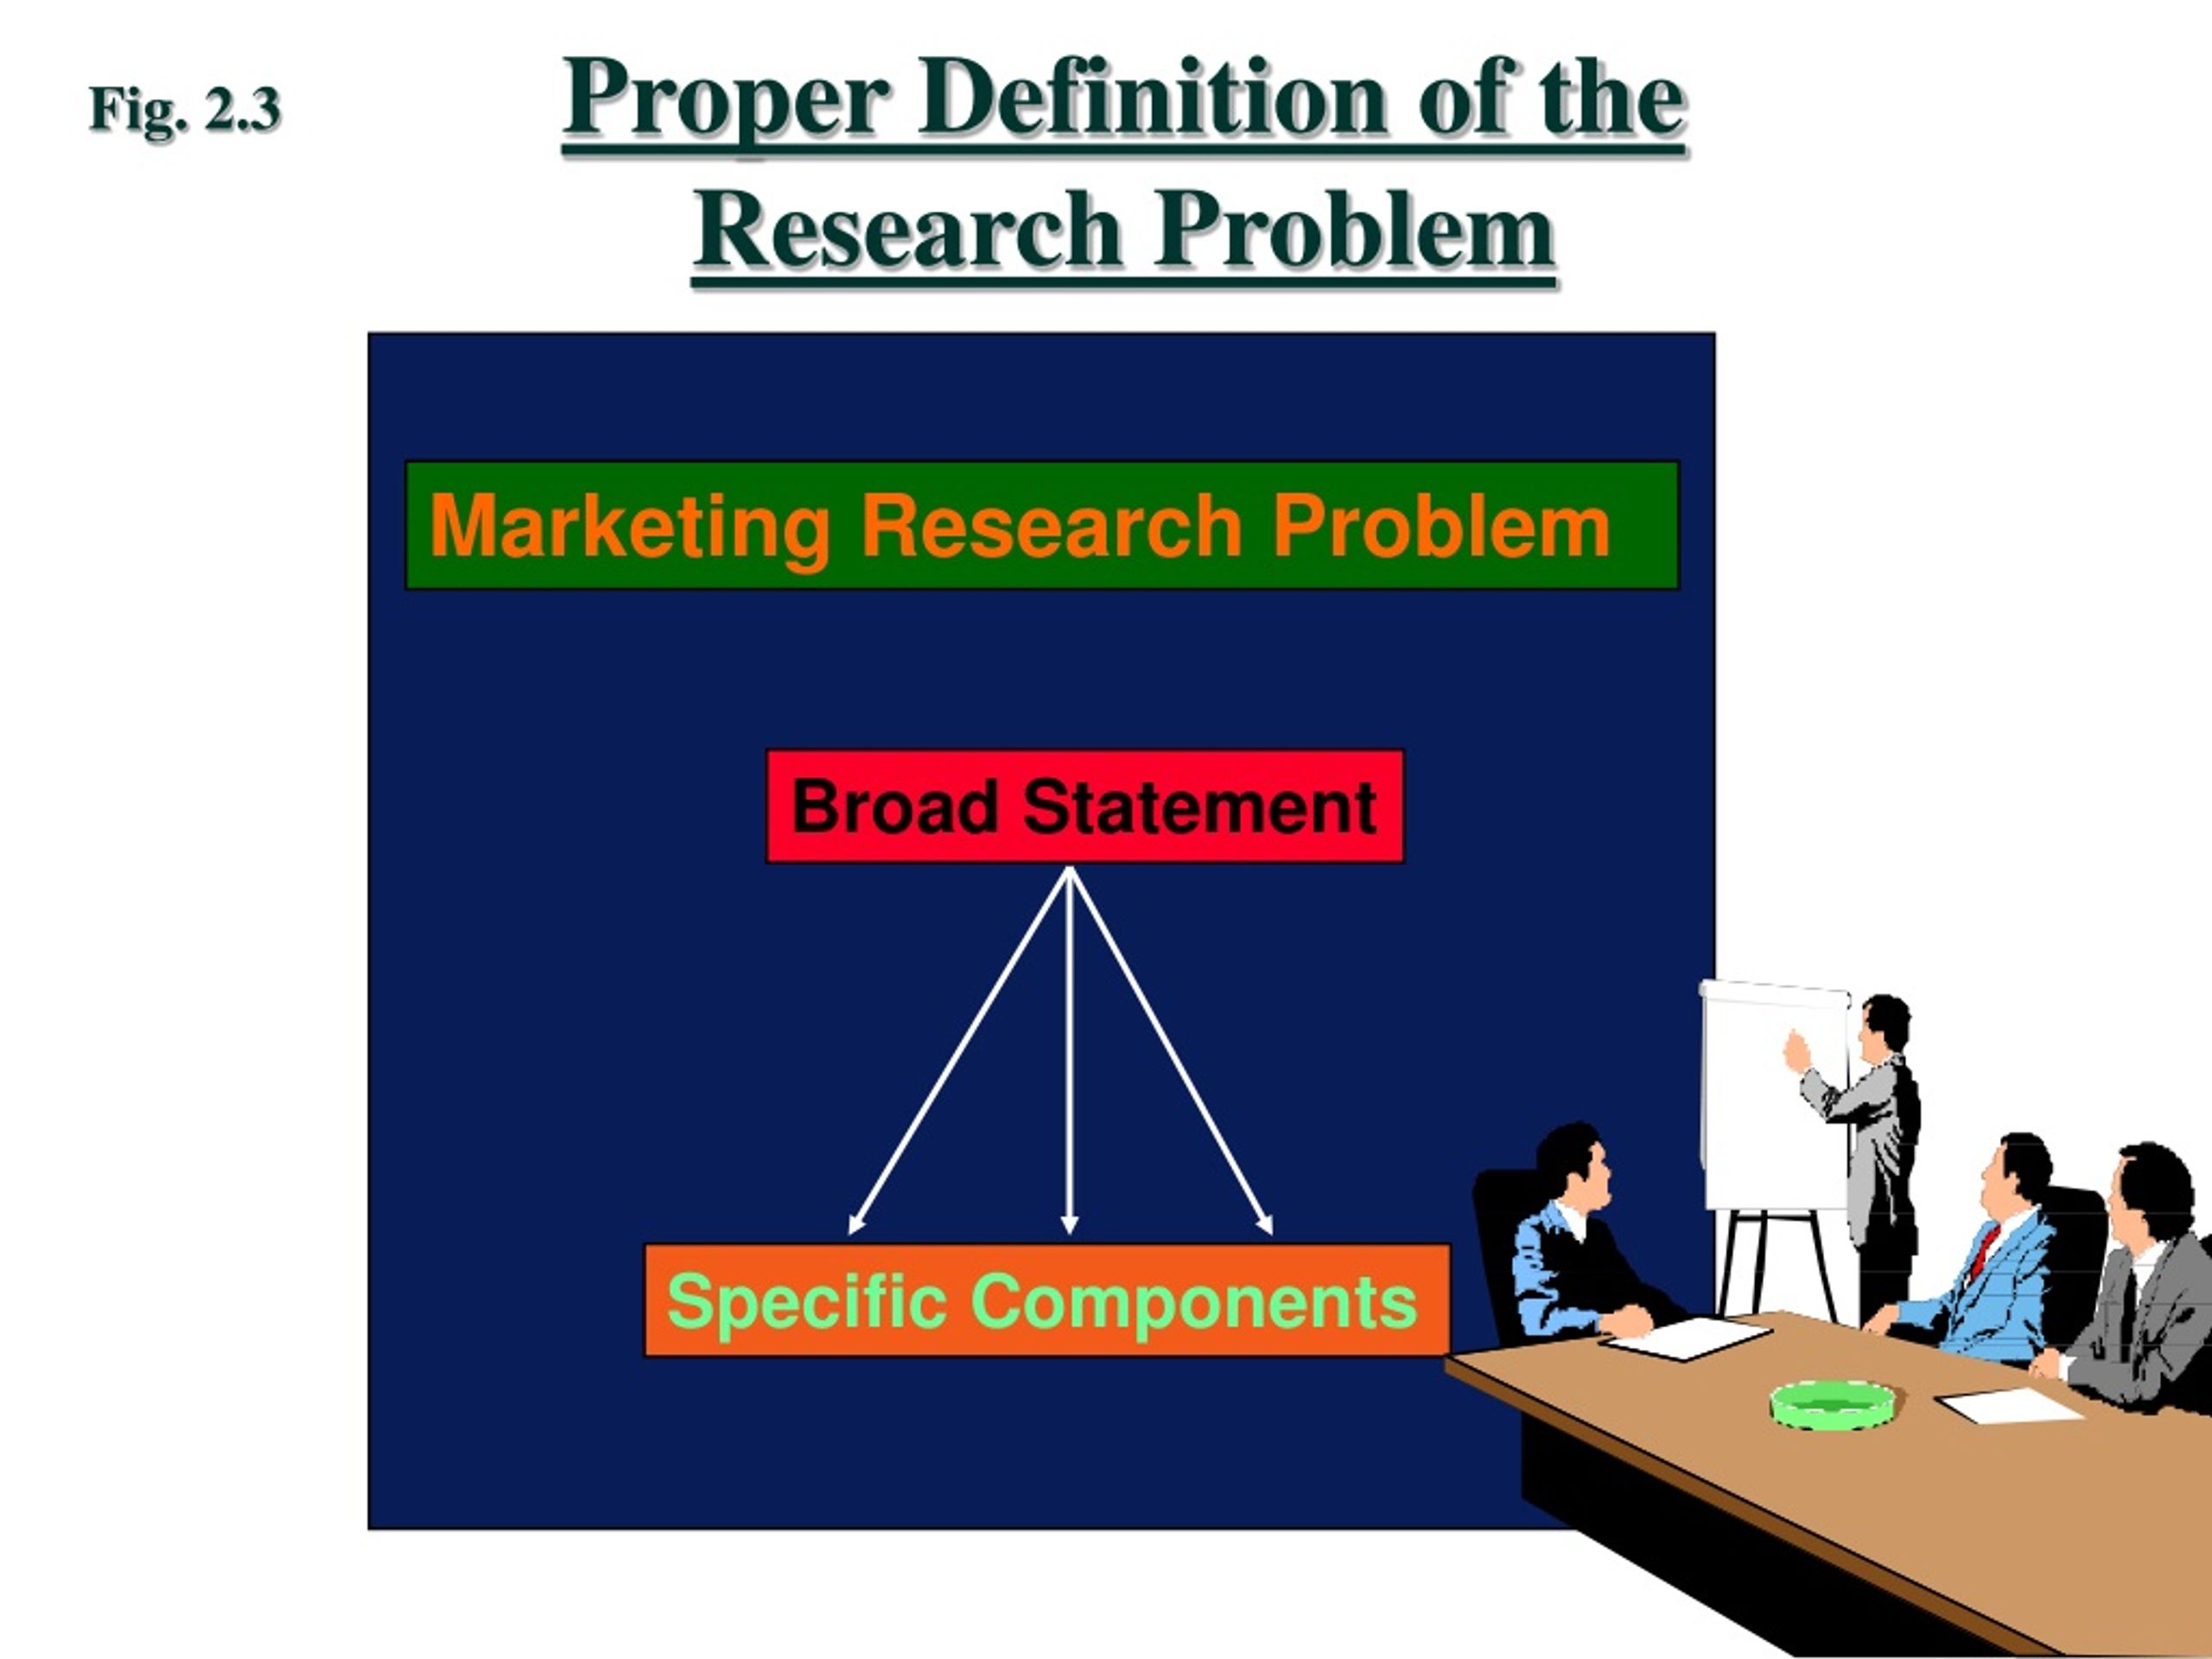 defining marketing research problem